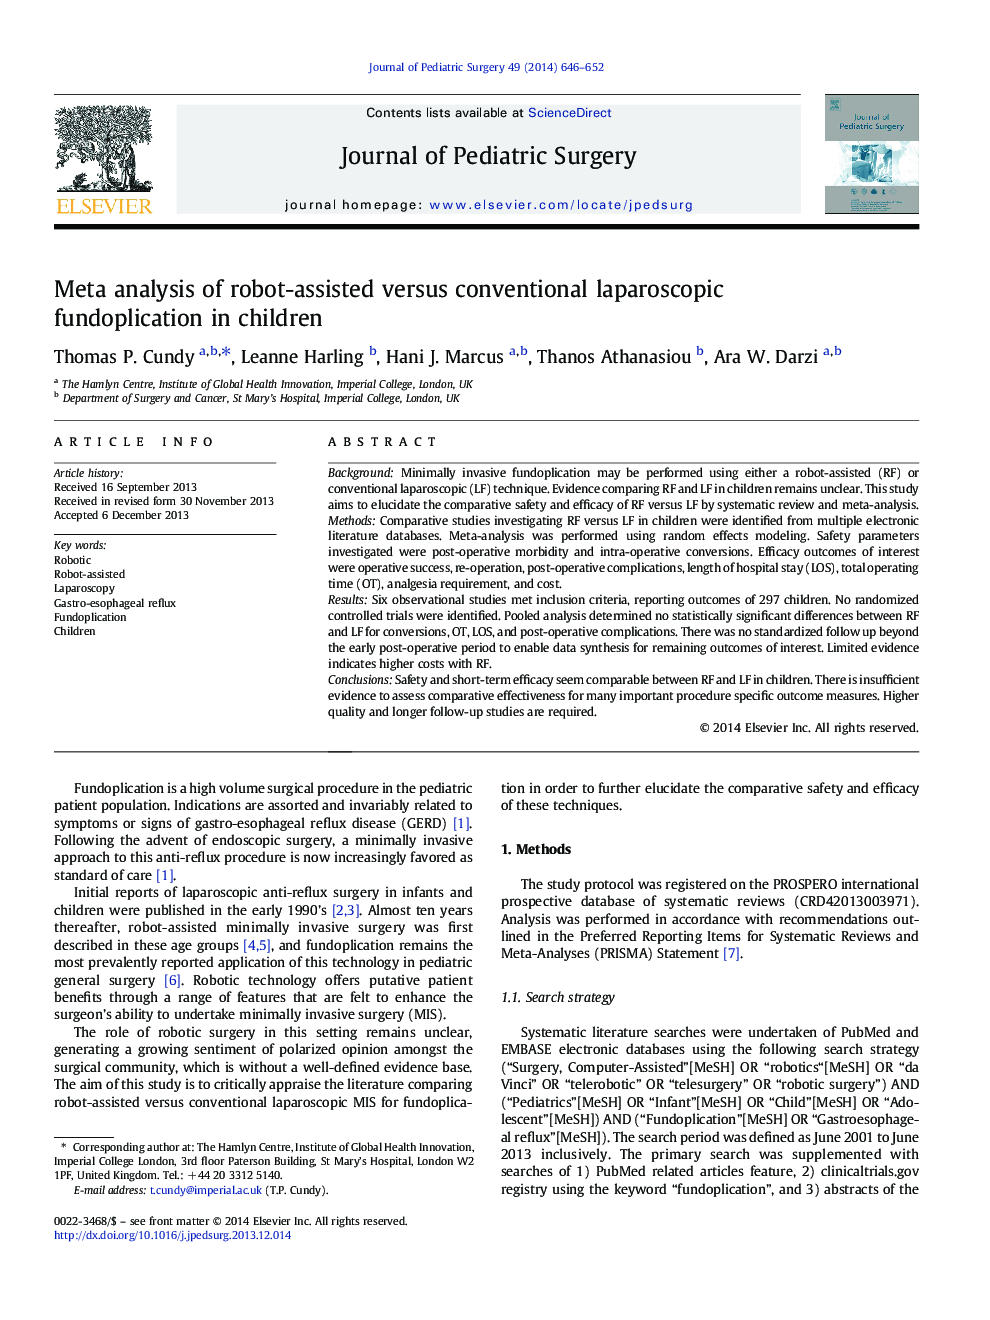 Meta analysis of robot-assisted versus conventional laparoscopic fundoplication in children